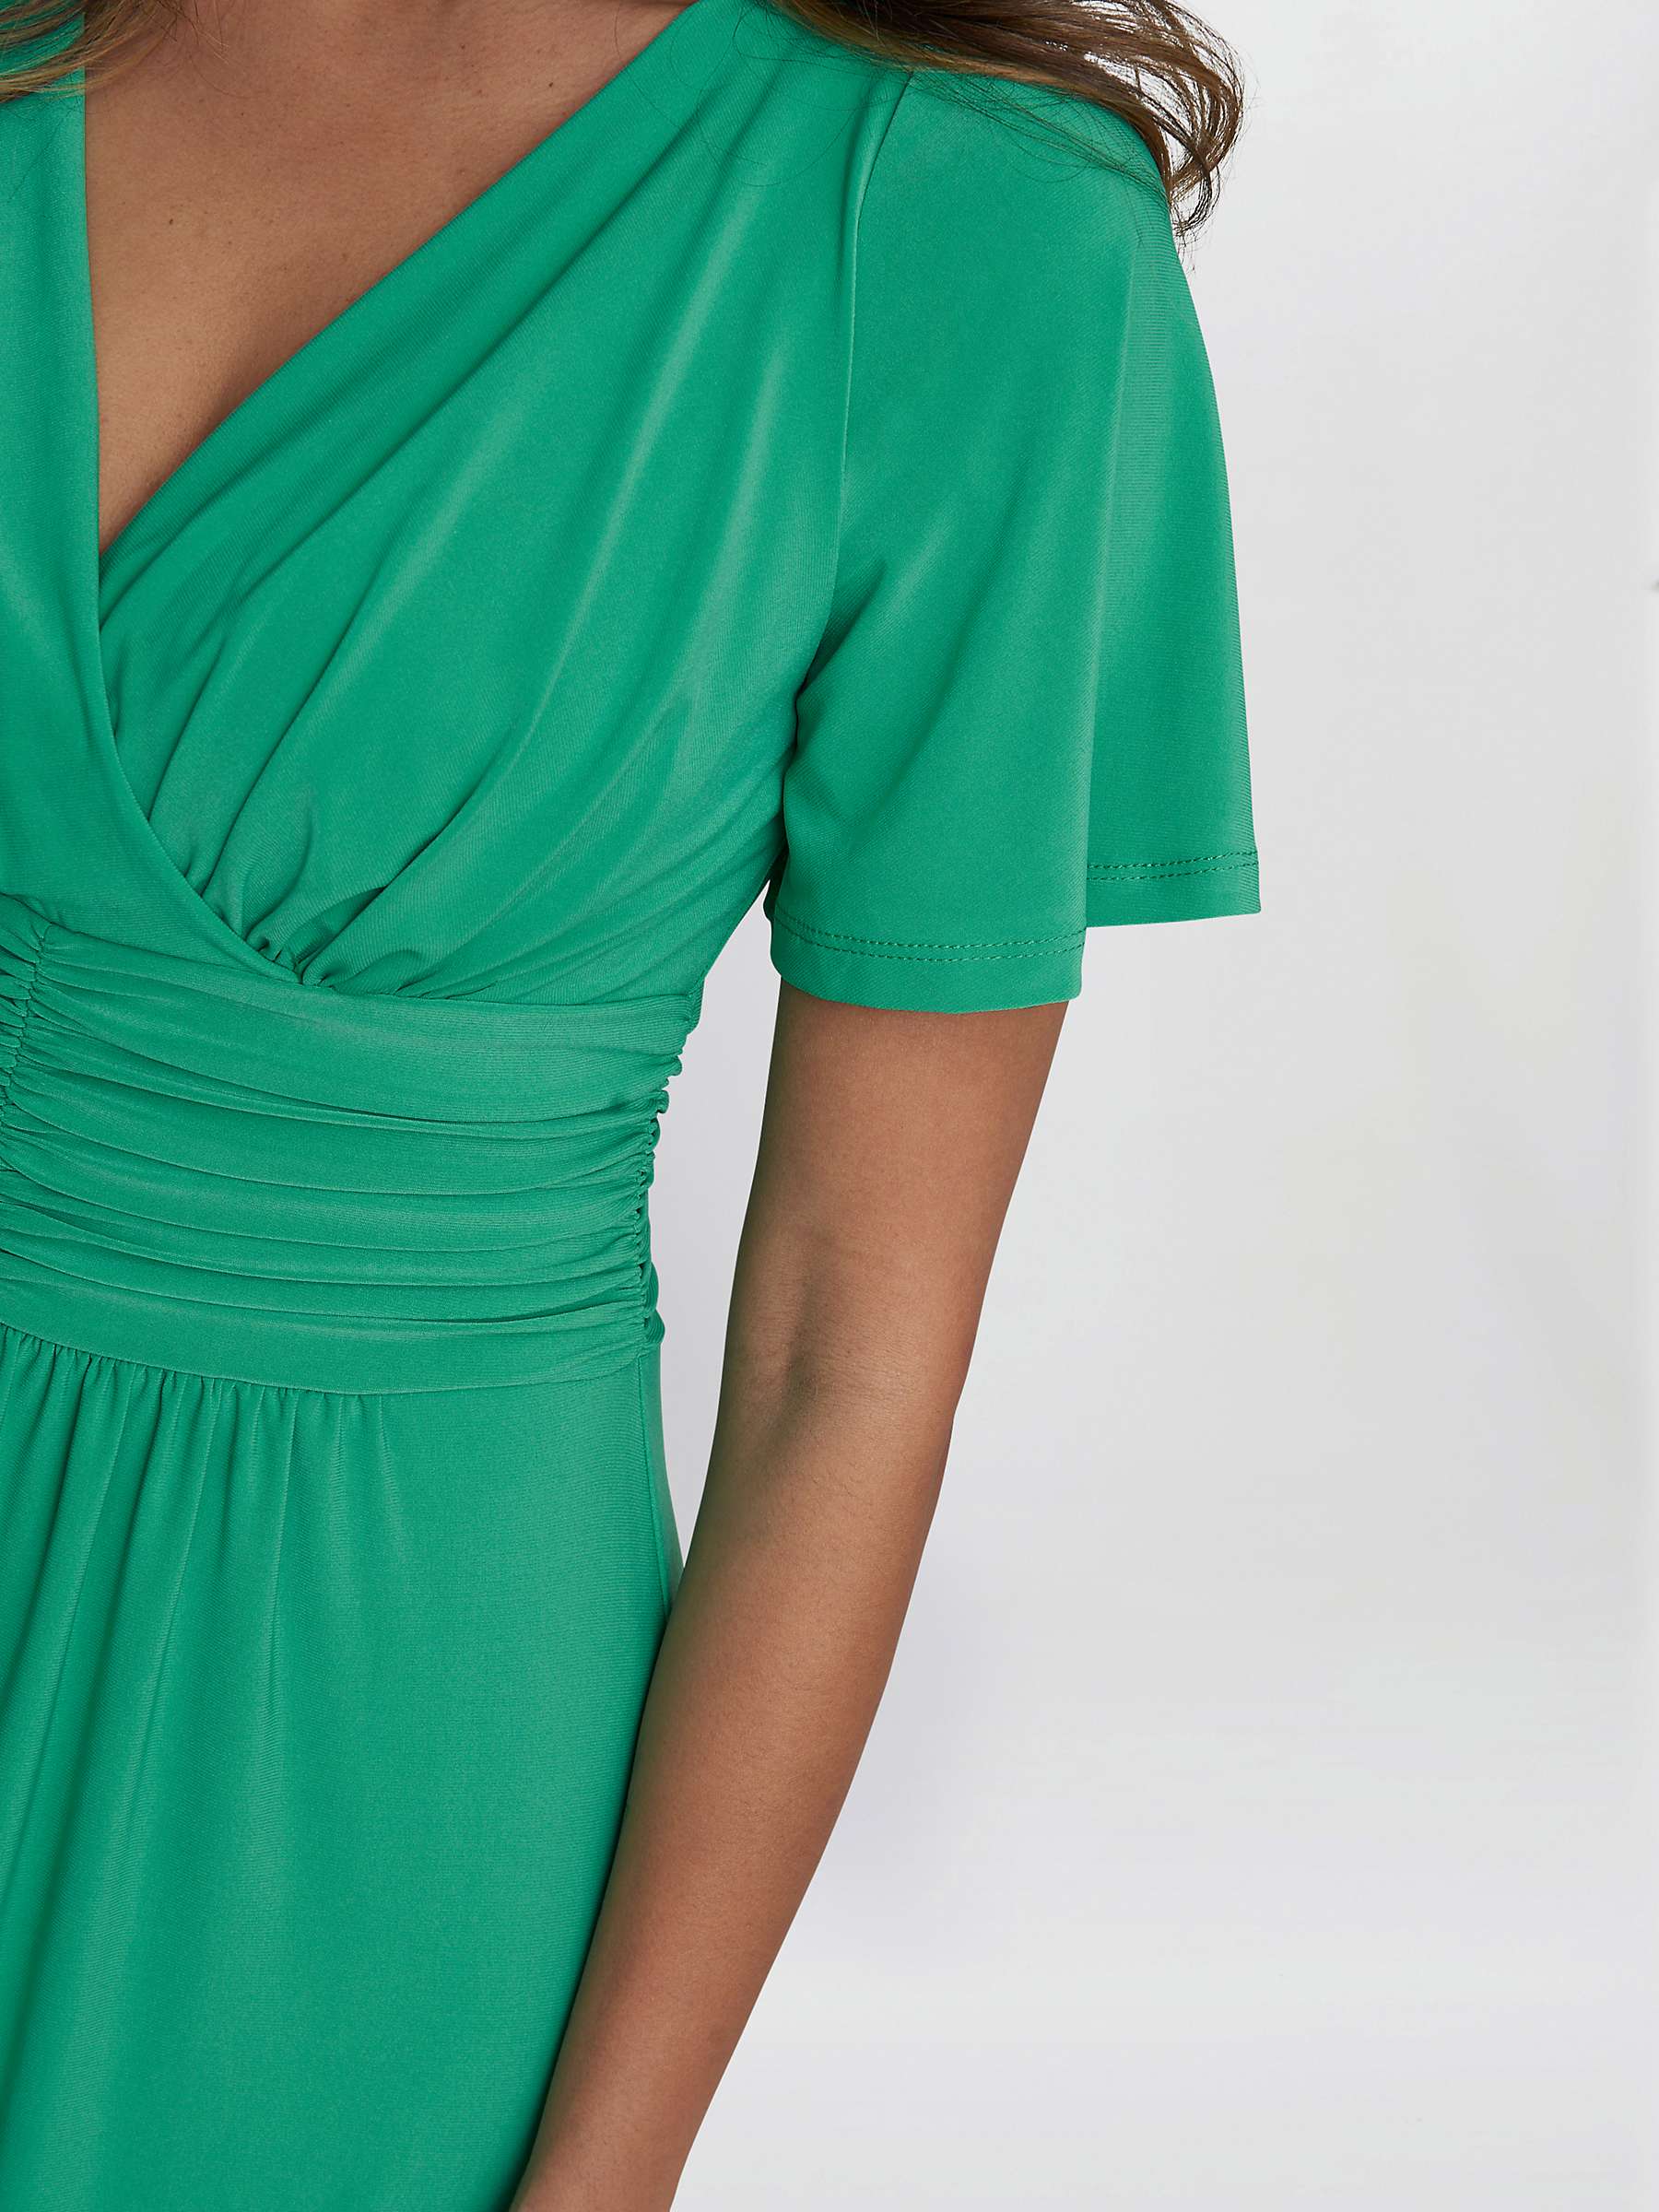 Buy Gina Bacconi Elena Jersey Maxi Dress, Jade Online at johnlewis.com